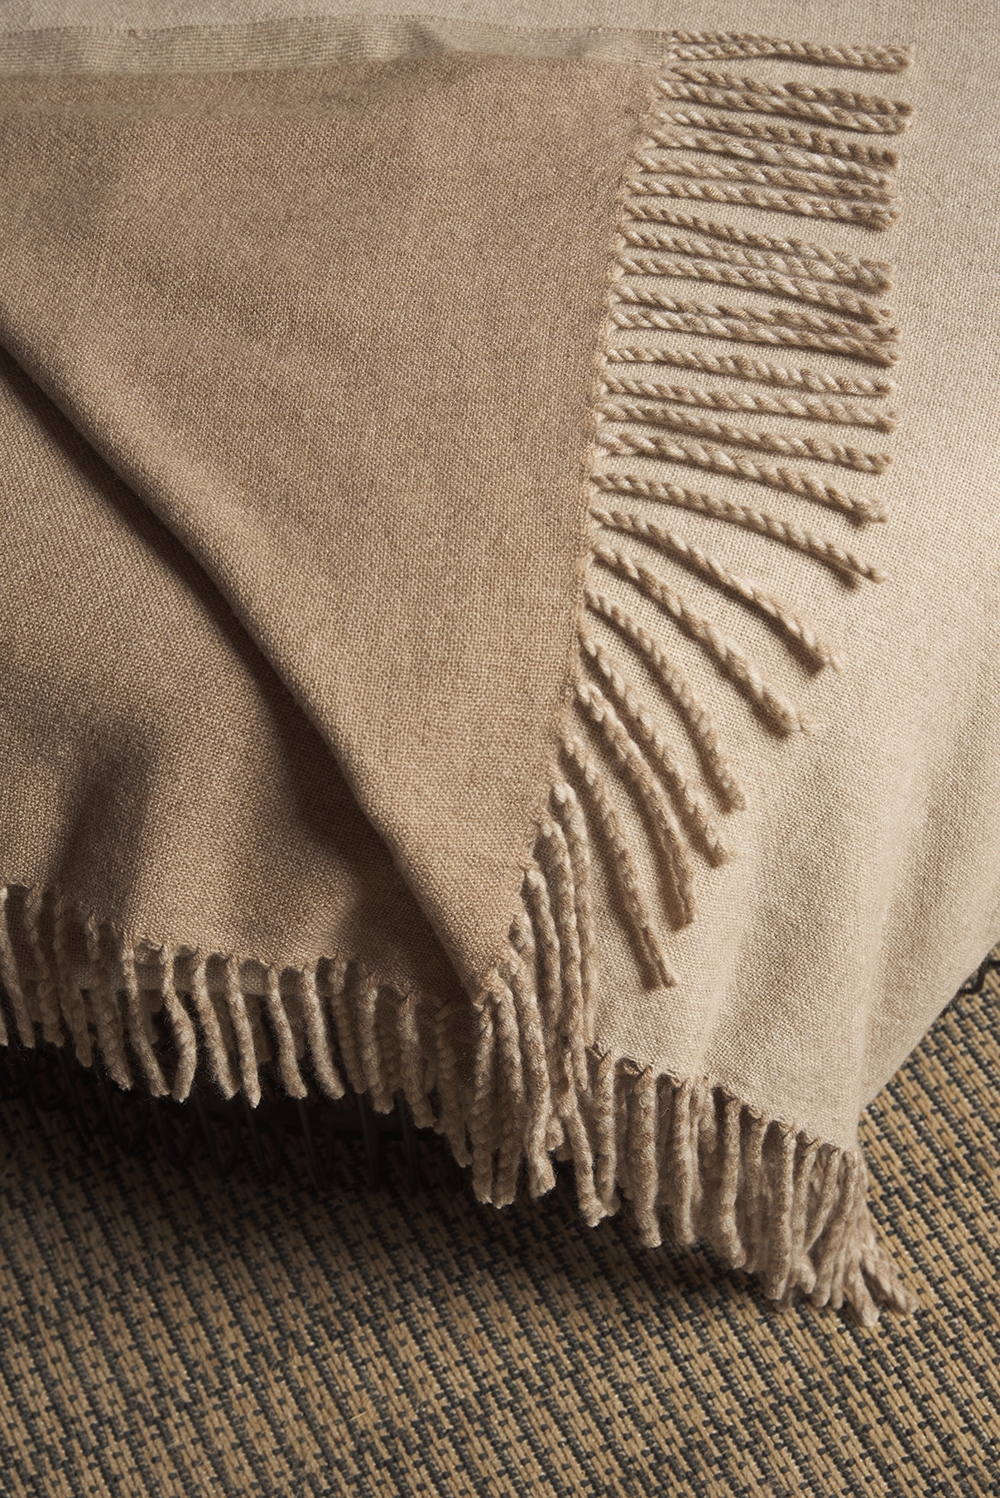 Cashmere accessories blanket amadora 140 x 220 natural brown   natural beige 140 x 220 cm